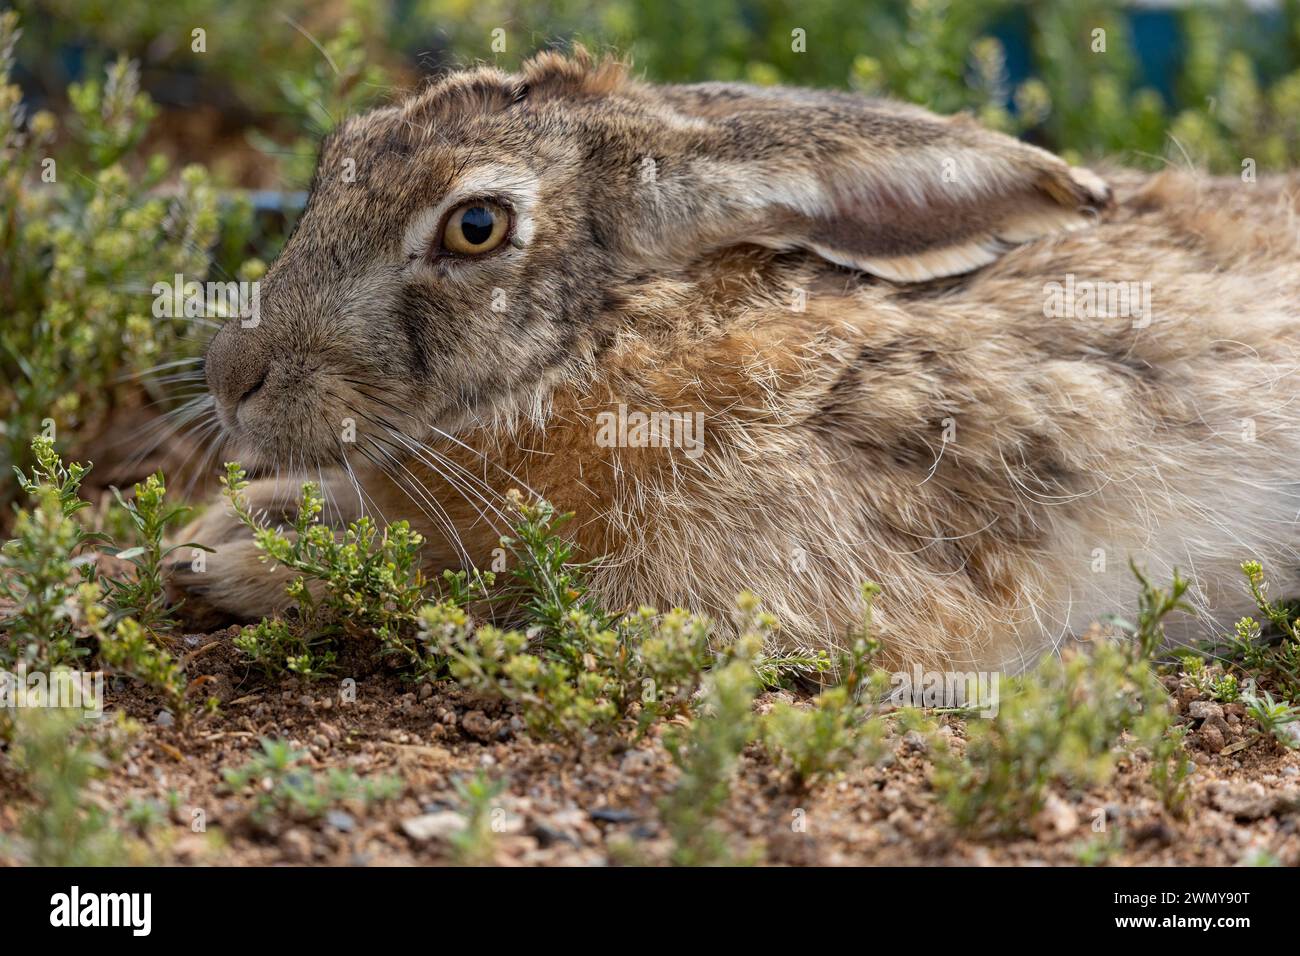 Mongolia, Eastern Mongolia, Steppe, Tolai's Hare (Lepus tolai), in the grass Stock Photo